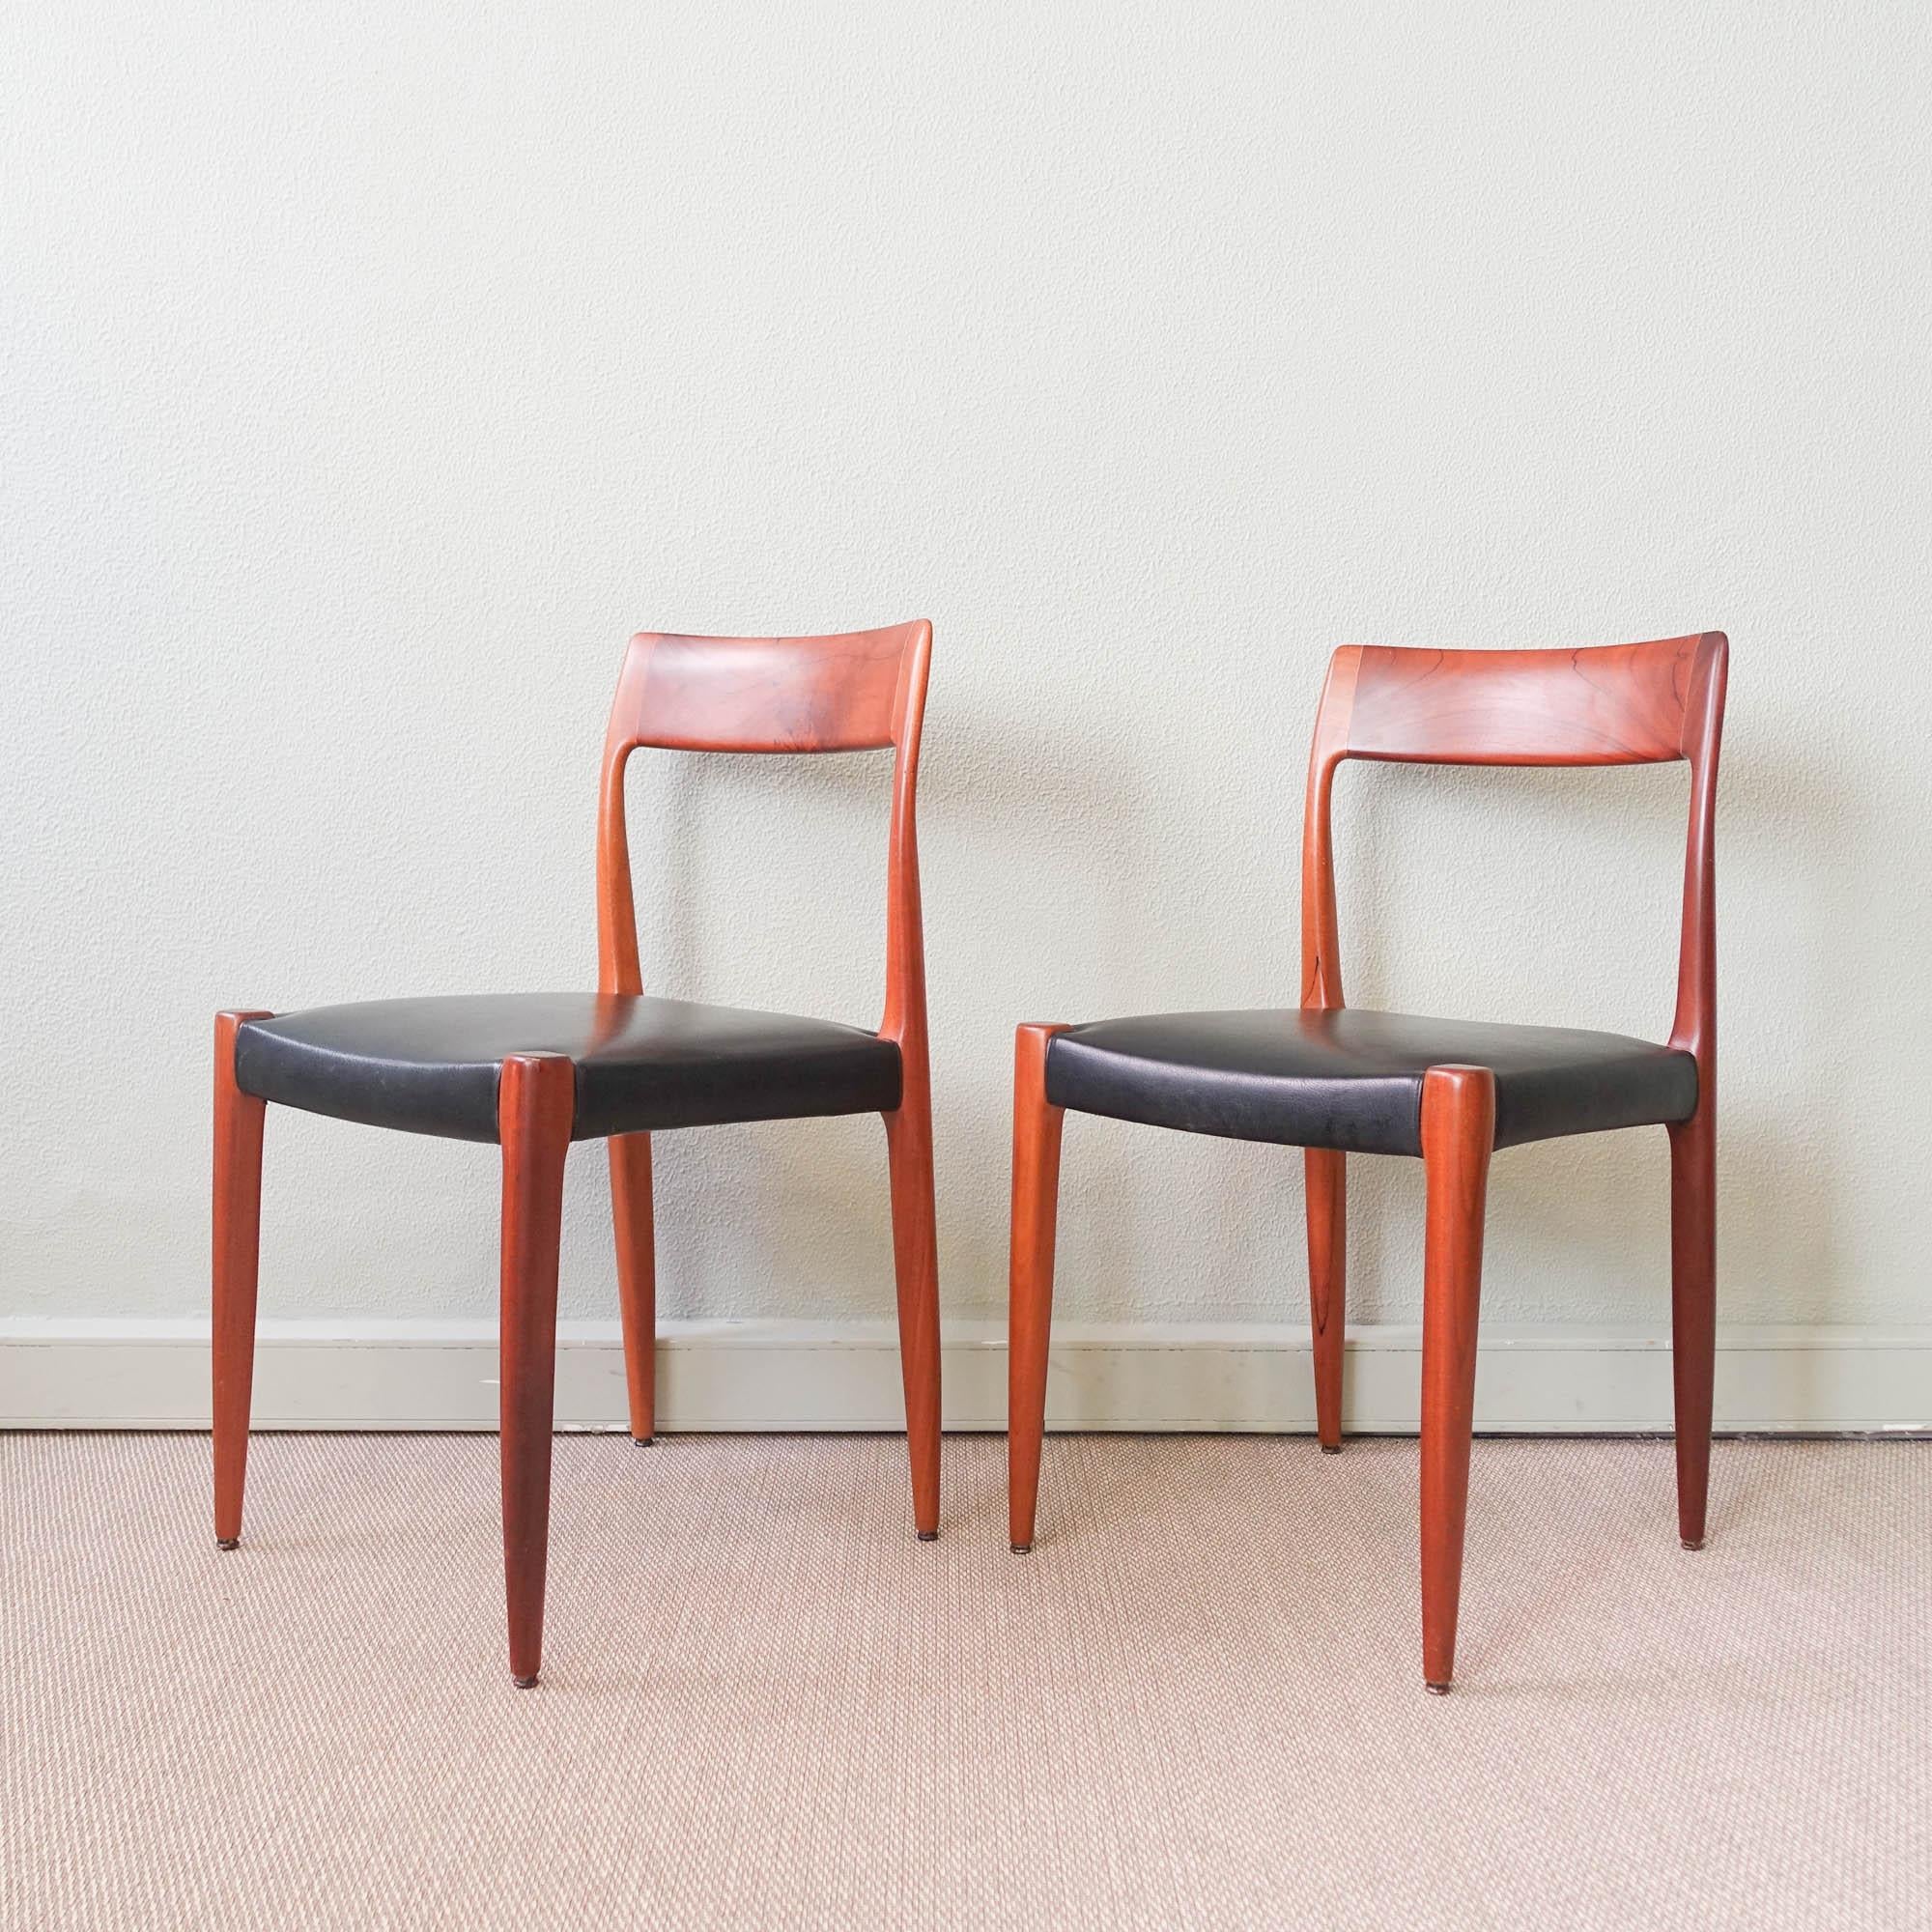 Mid-20th Century Set of 4 Olaio Chairs Model Caravela by José Espinho, 1965